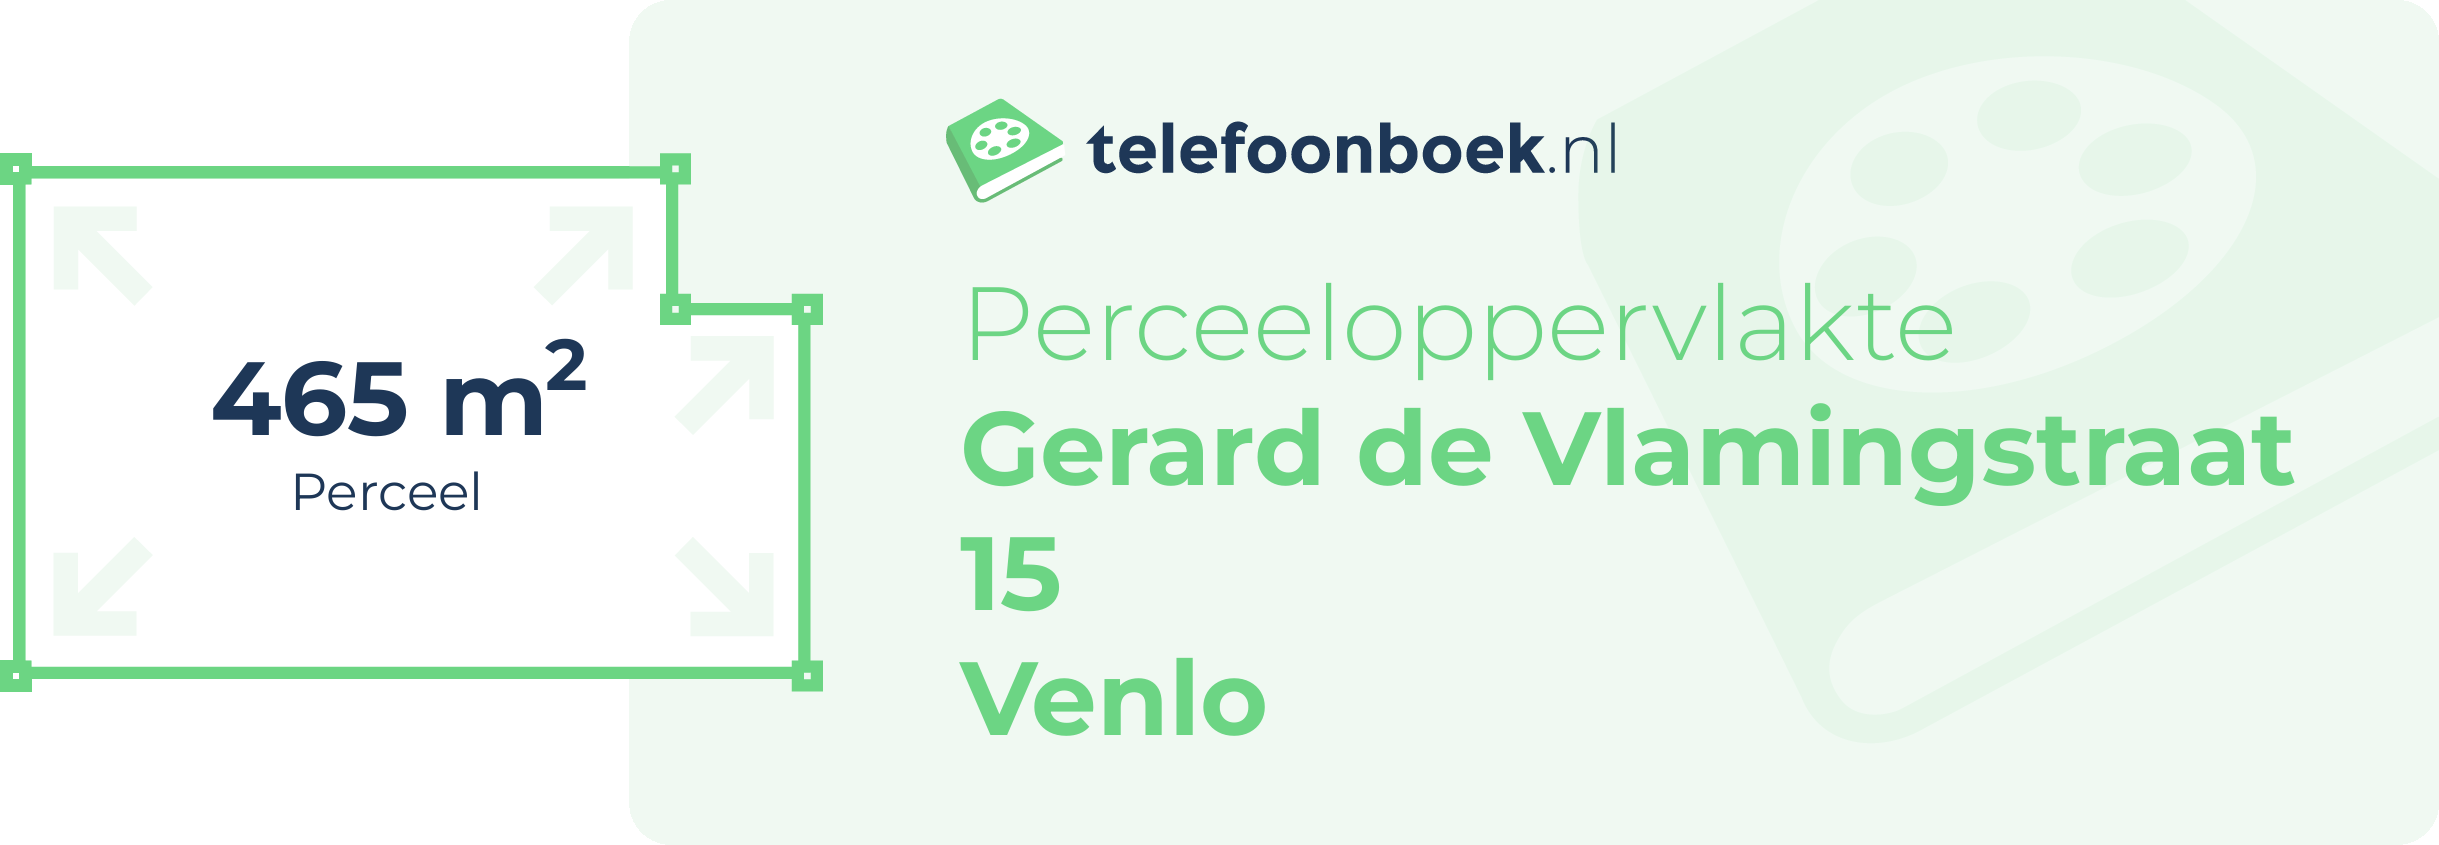 Perceeloppervlakte Gerard De Vlamingstraat 15 Venlo